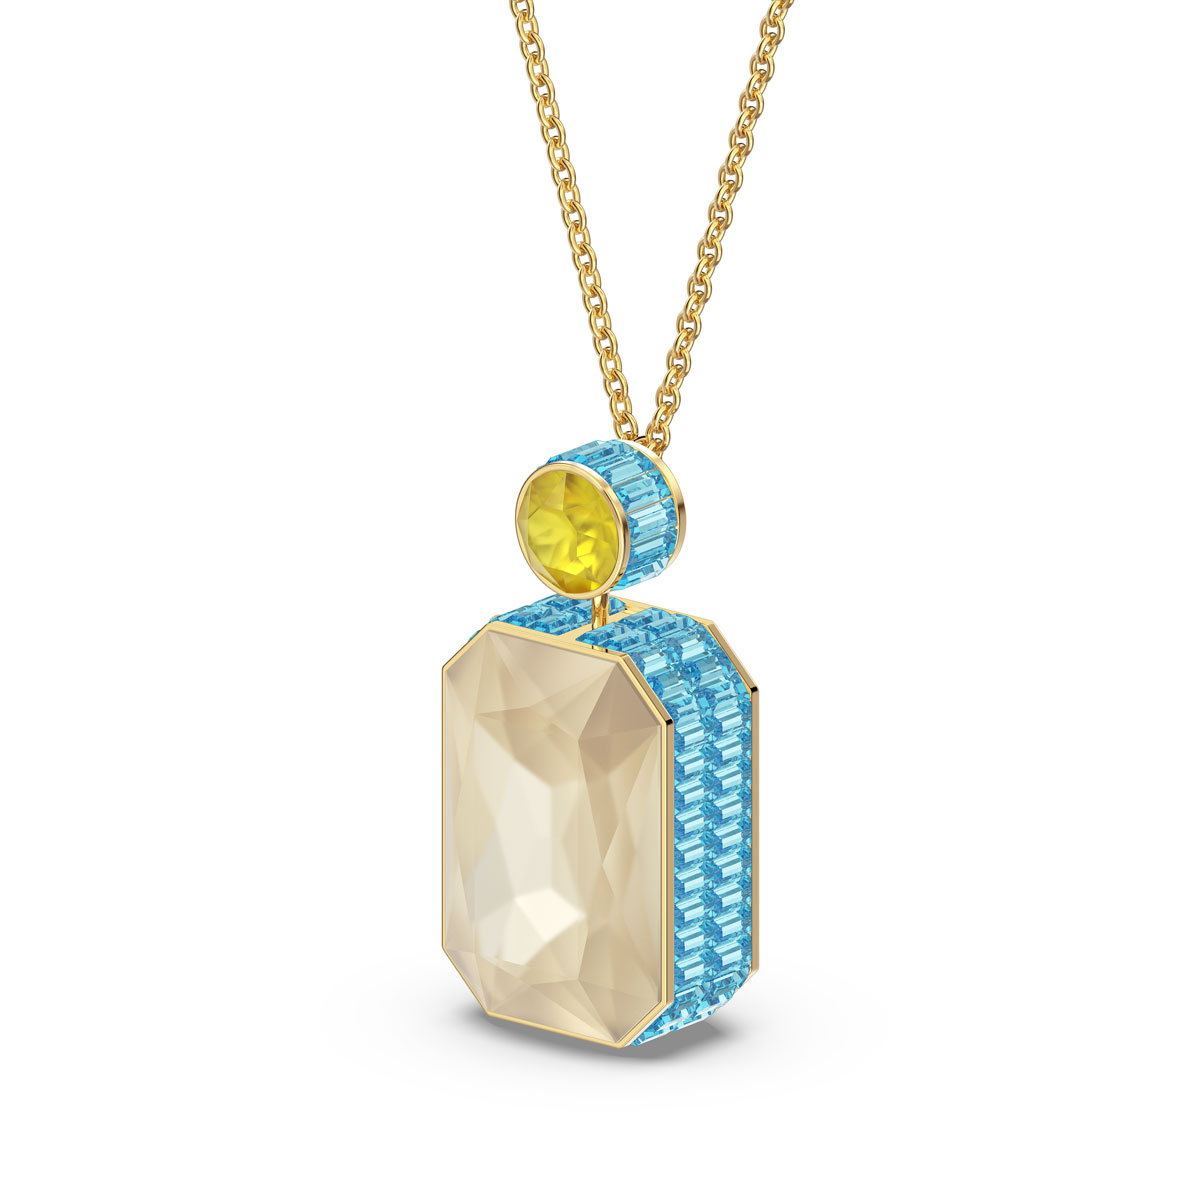 Swarovski Orbita Necklace, Octagon Cut Crystal, Multicolored, Gold-Tone Plated